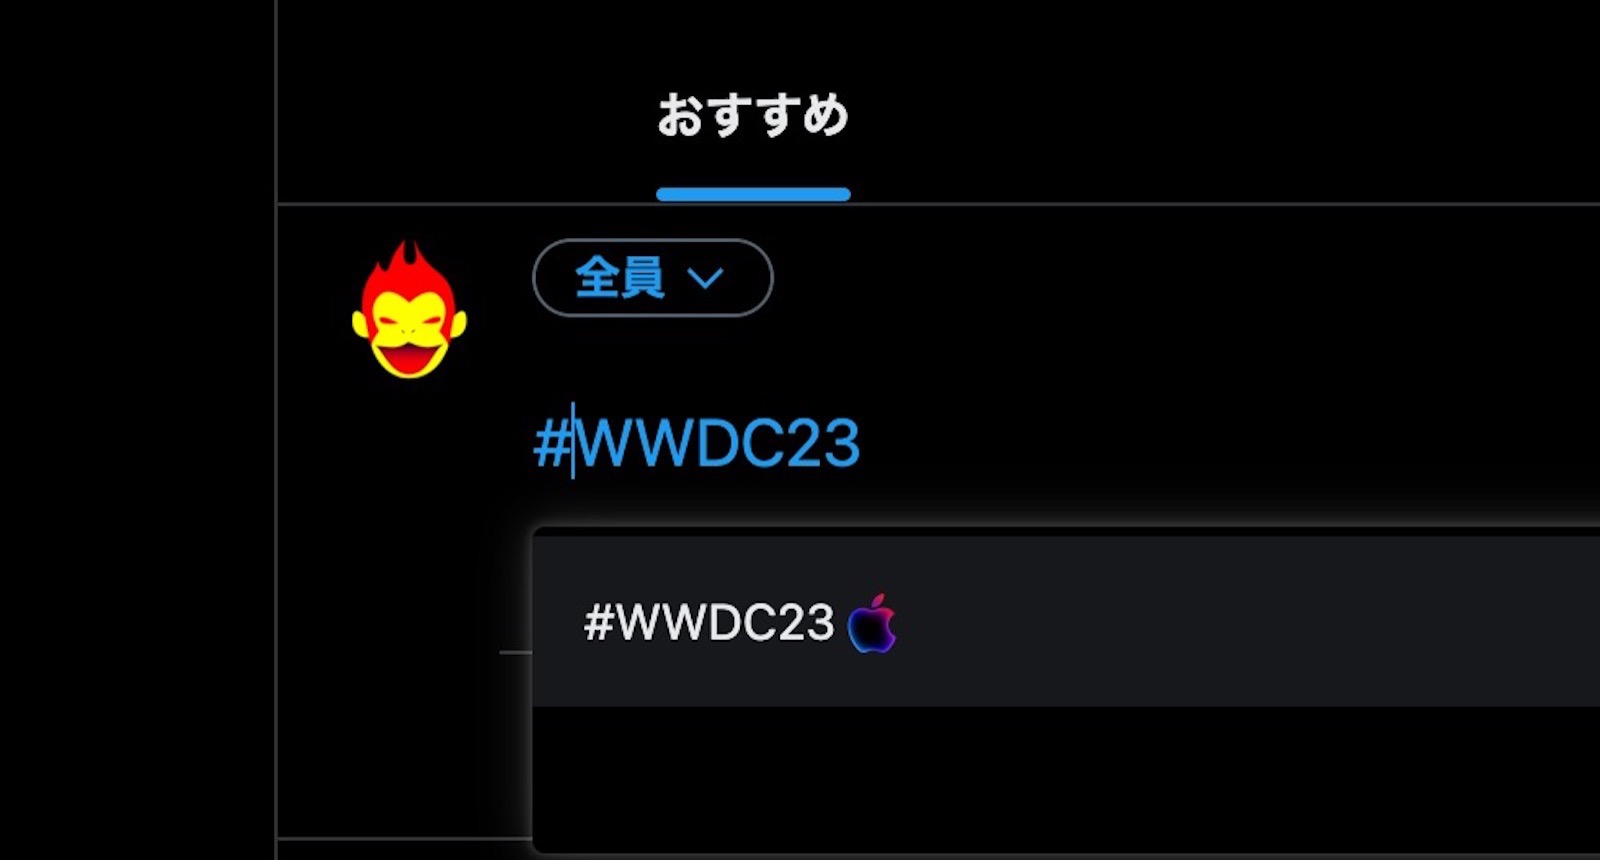 WWDC23 hashtag 2